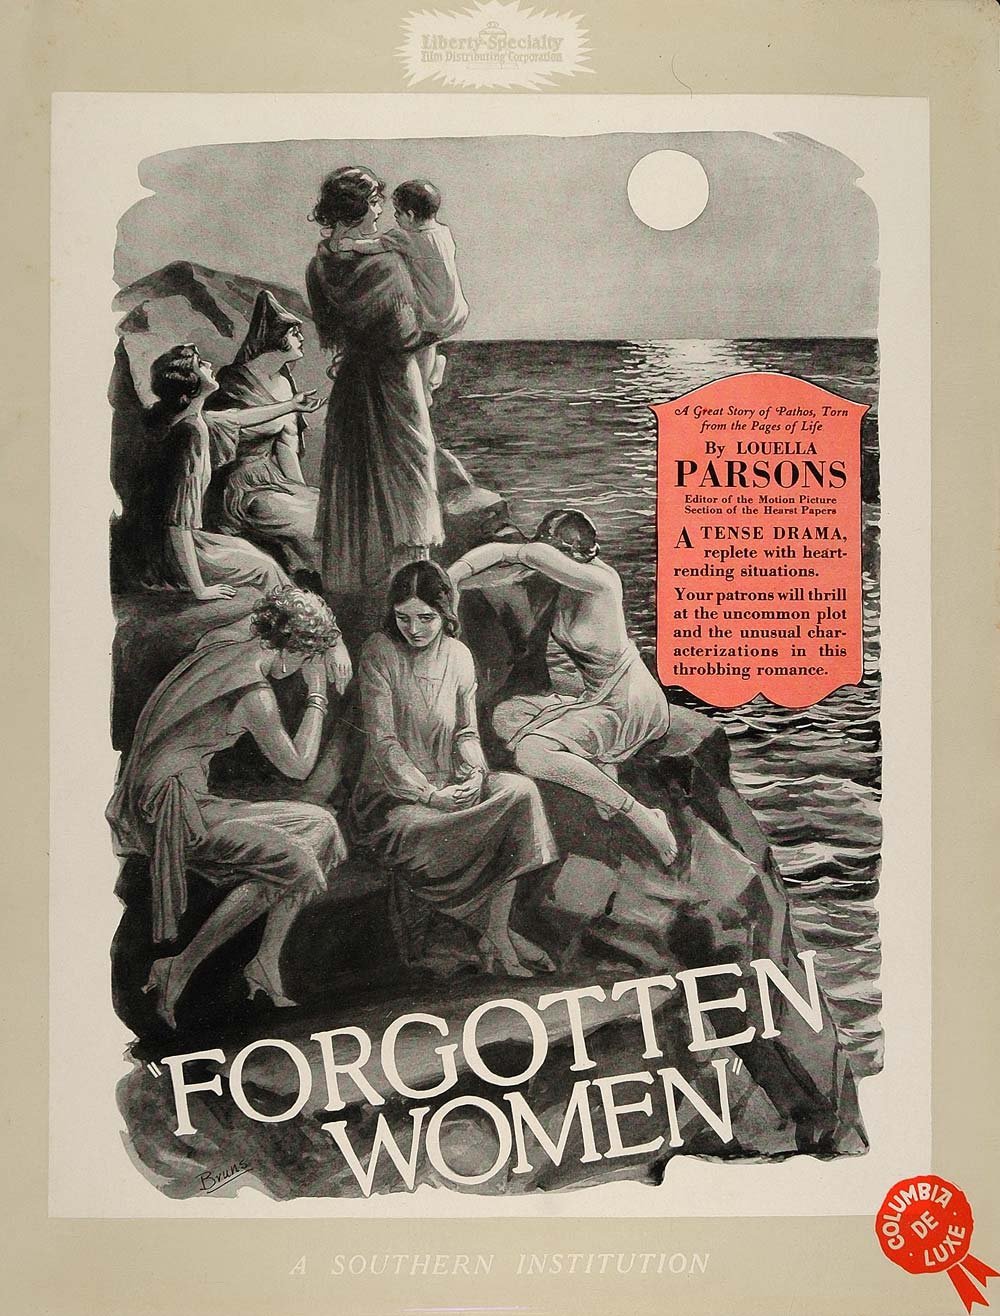 Isle of Forgotten Women